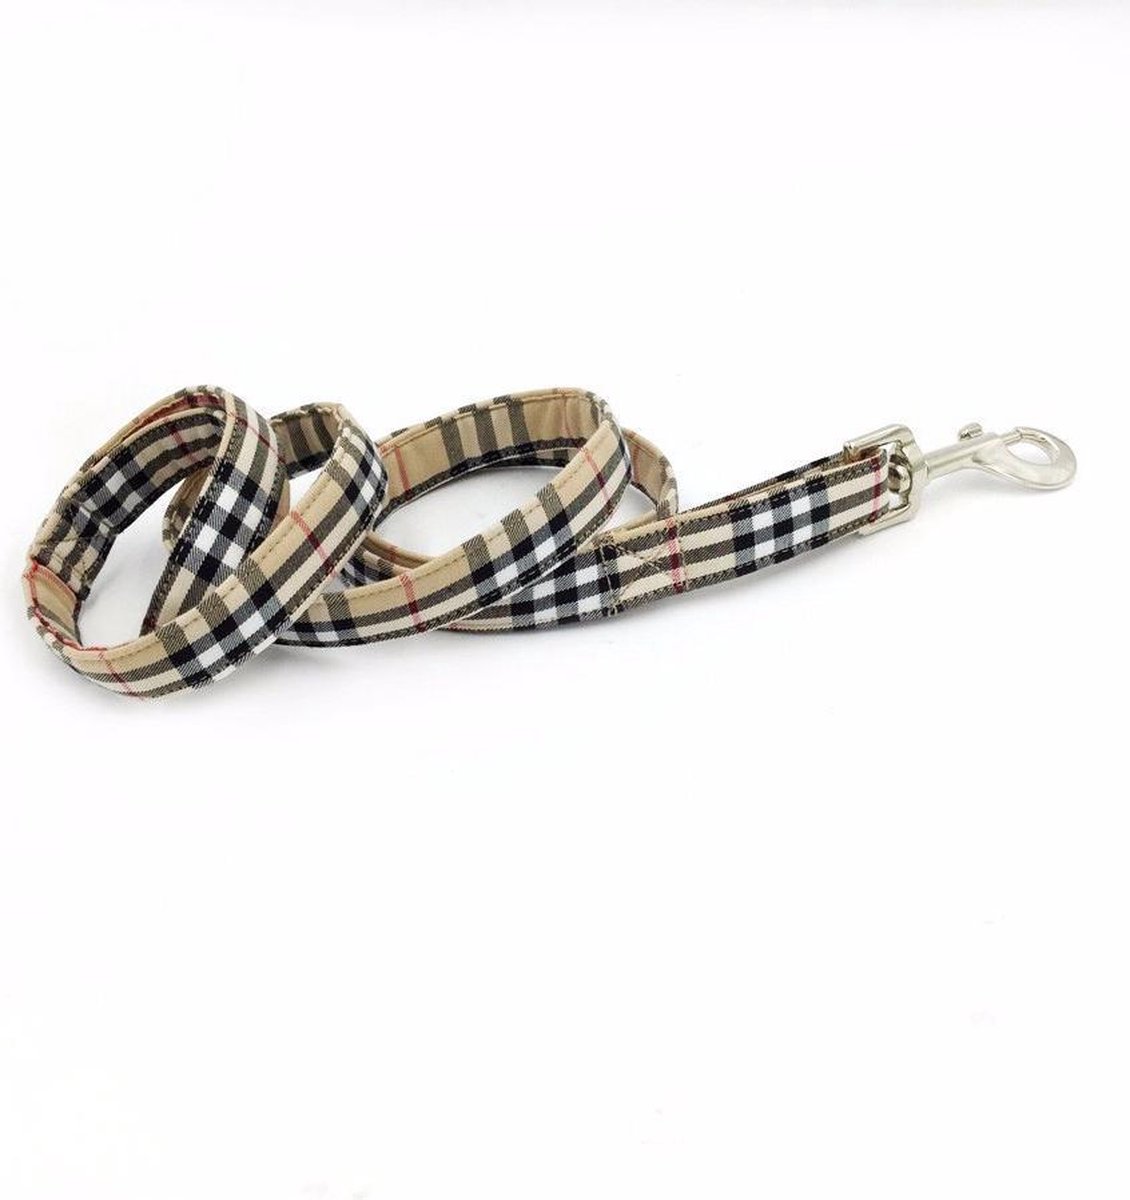 Halsband, losse strik en honden riem burberry van katoen | bol.com